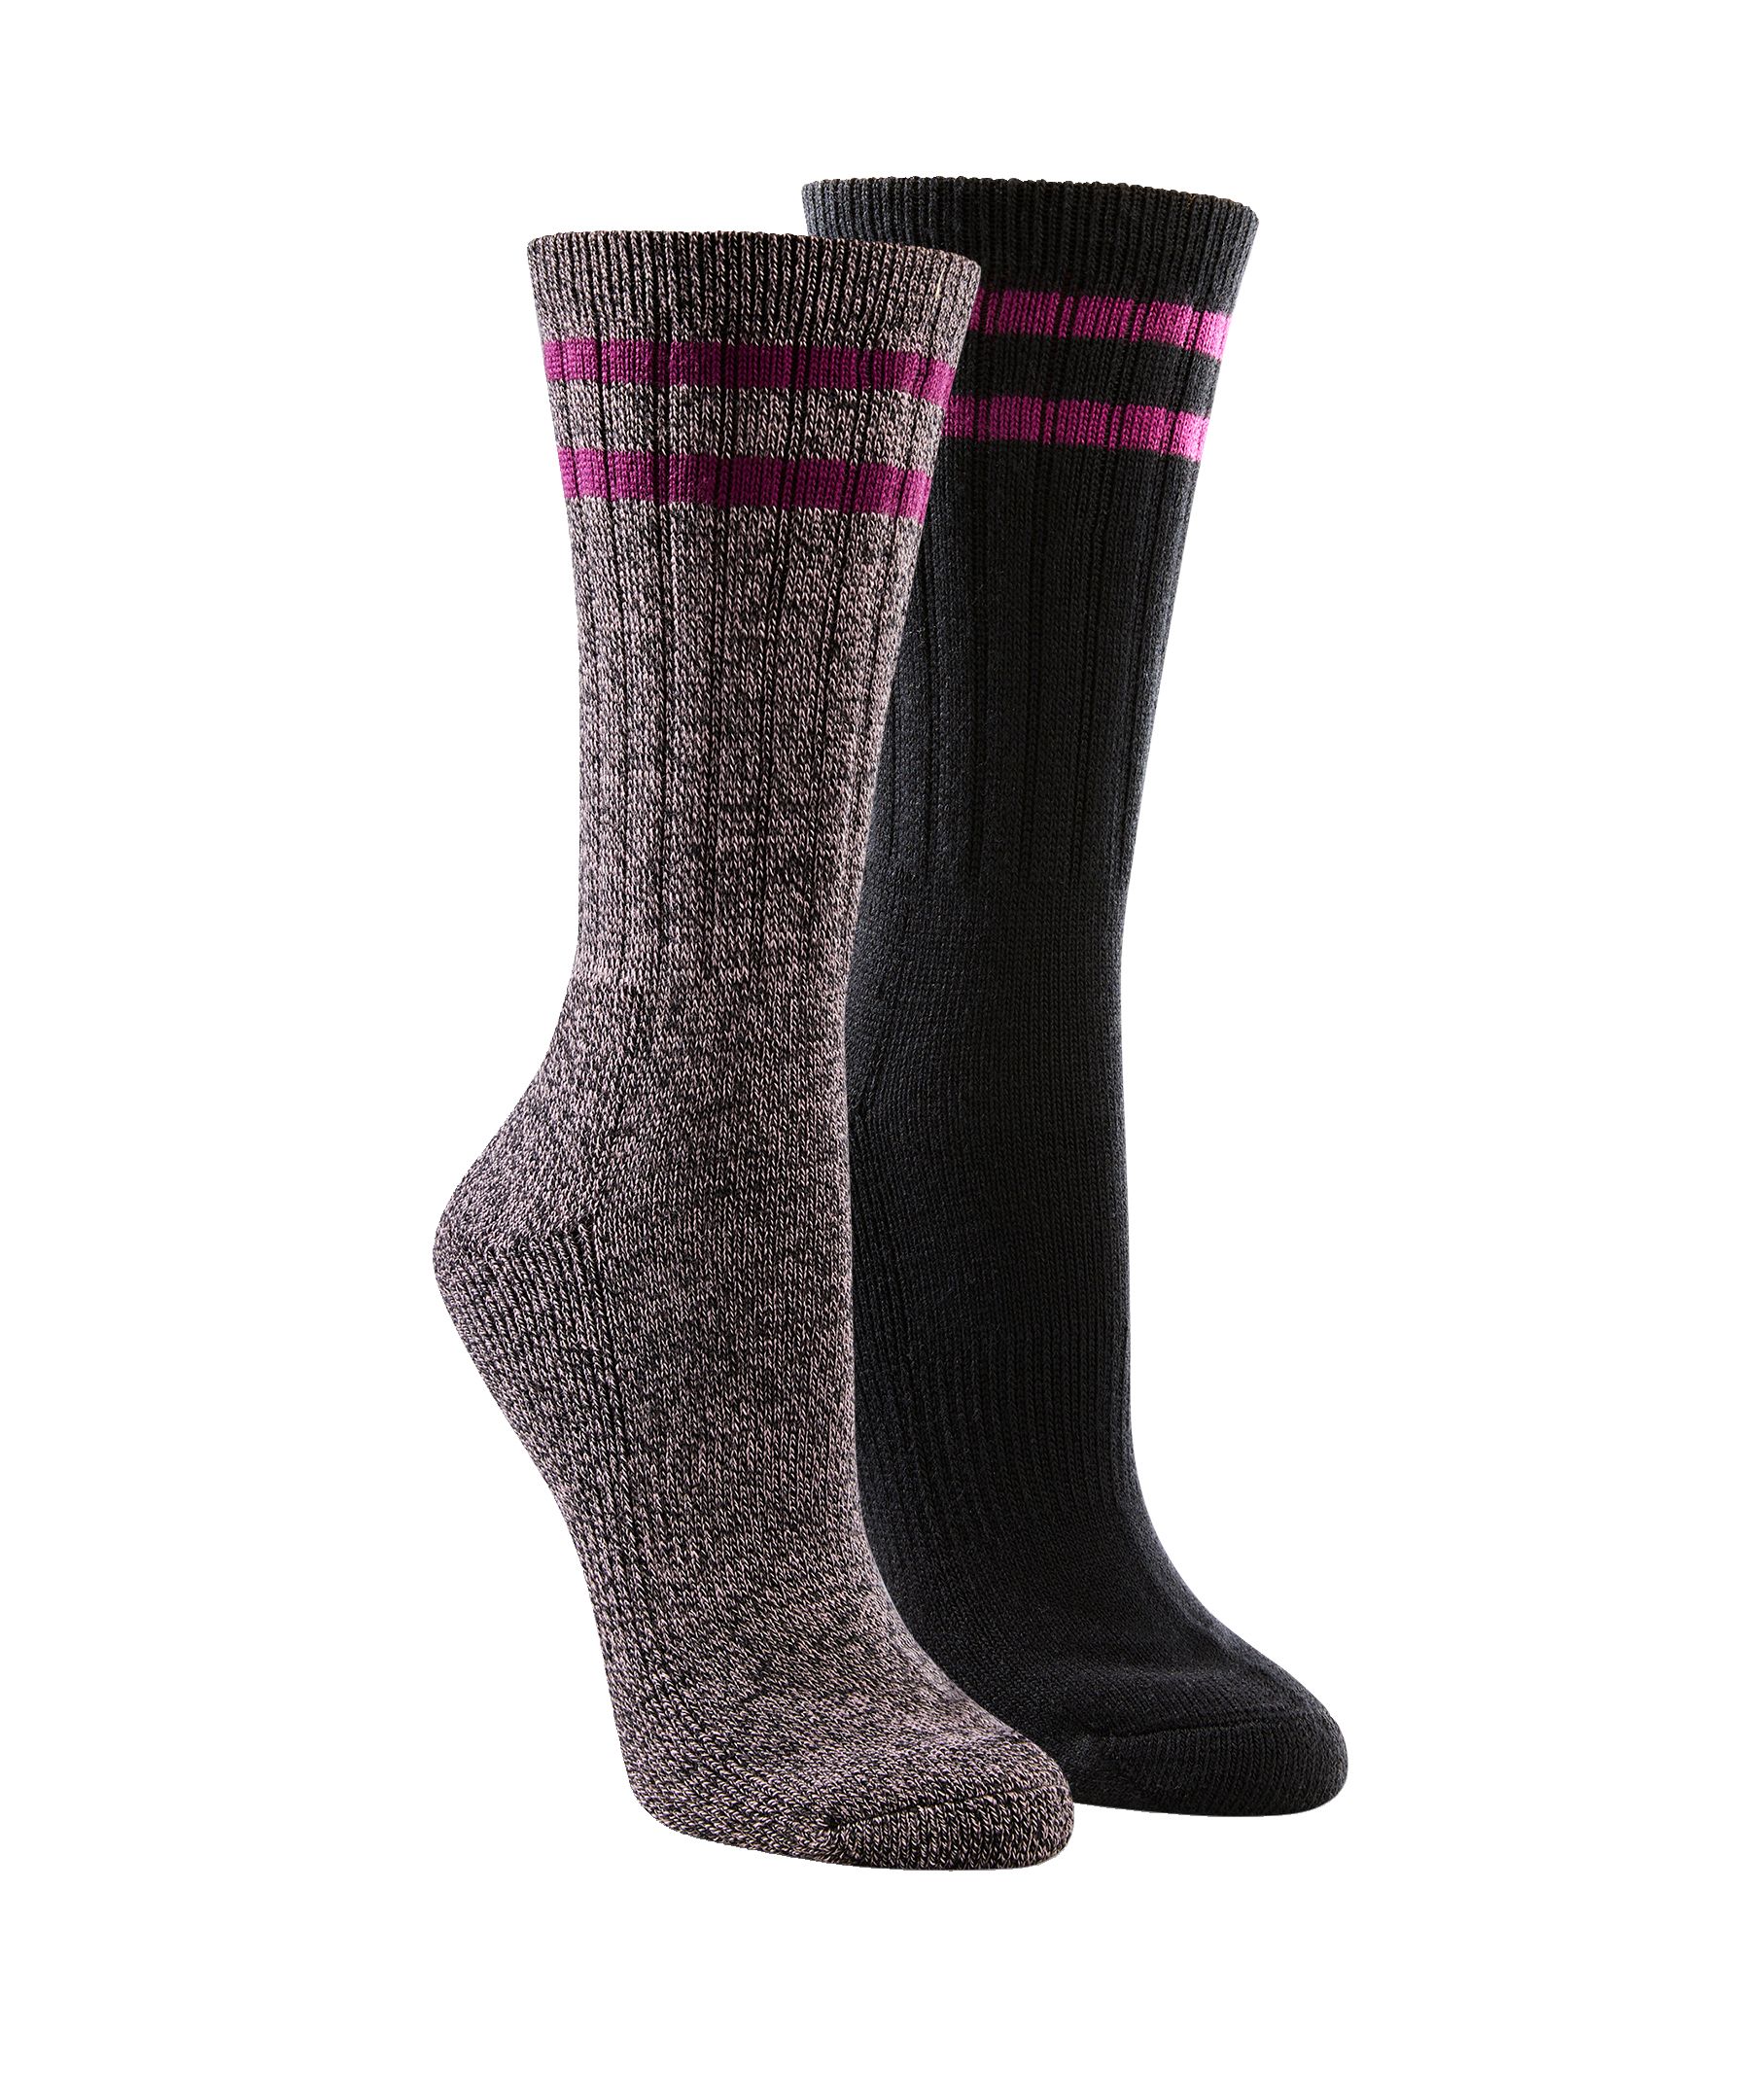 WindRiver Women's 2 Pack Super Soft Thermal Quad Comfort Boot Socks